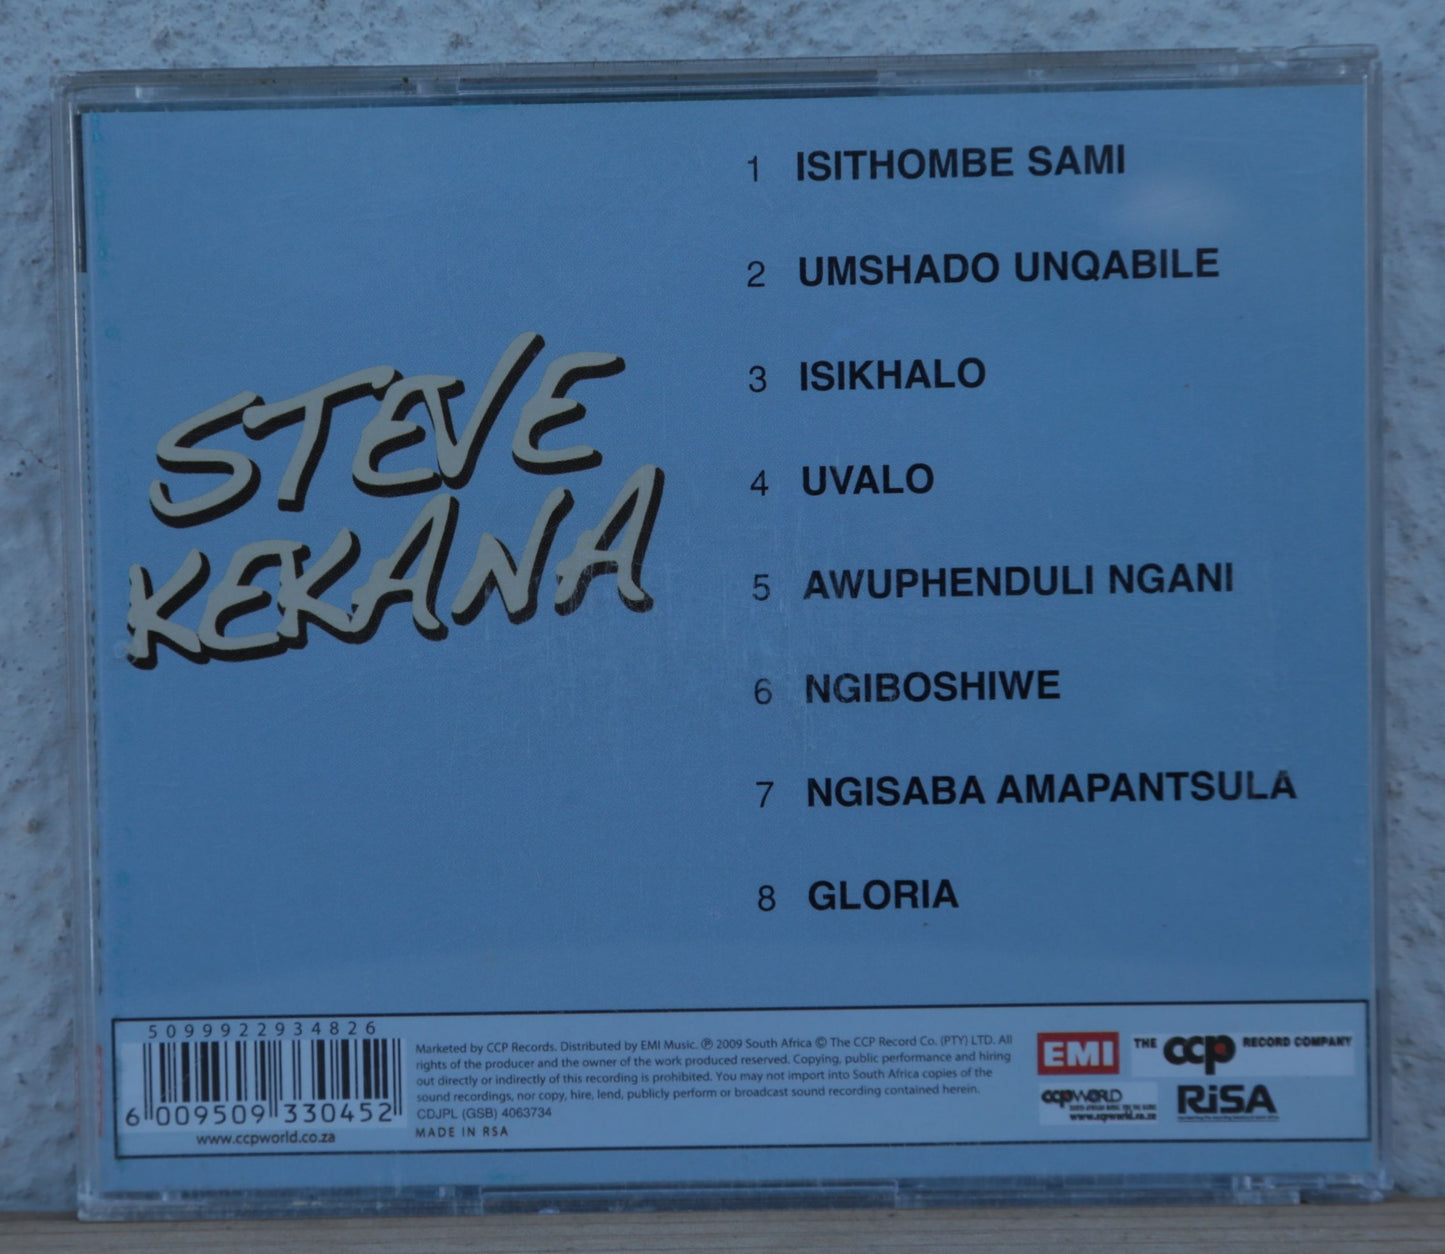 Steve Kekana - Isithombe Sami